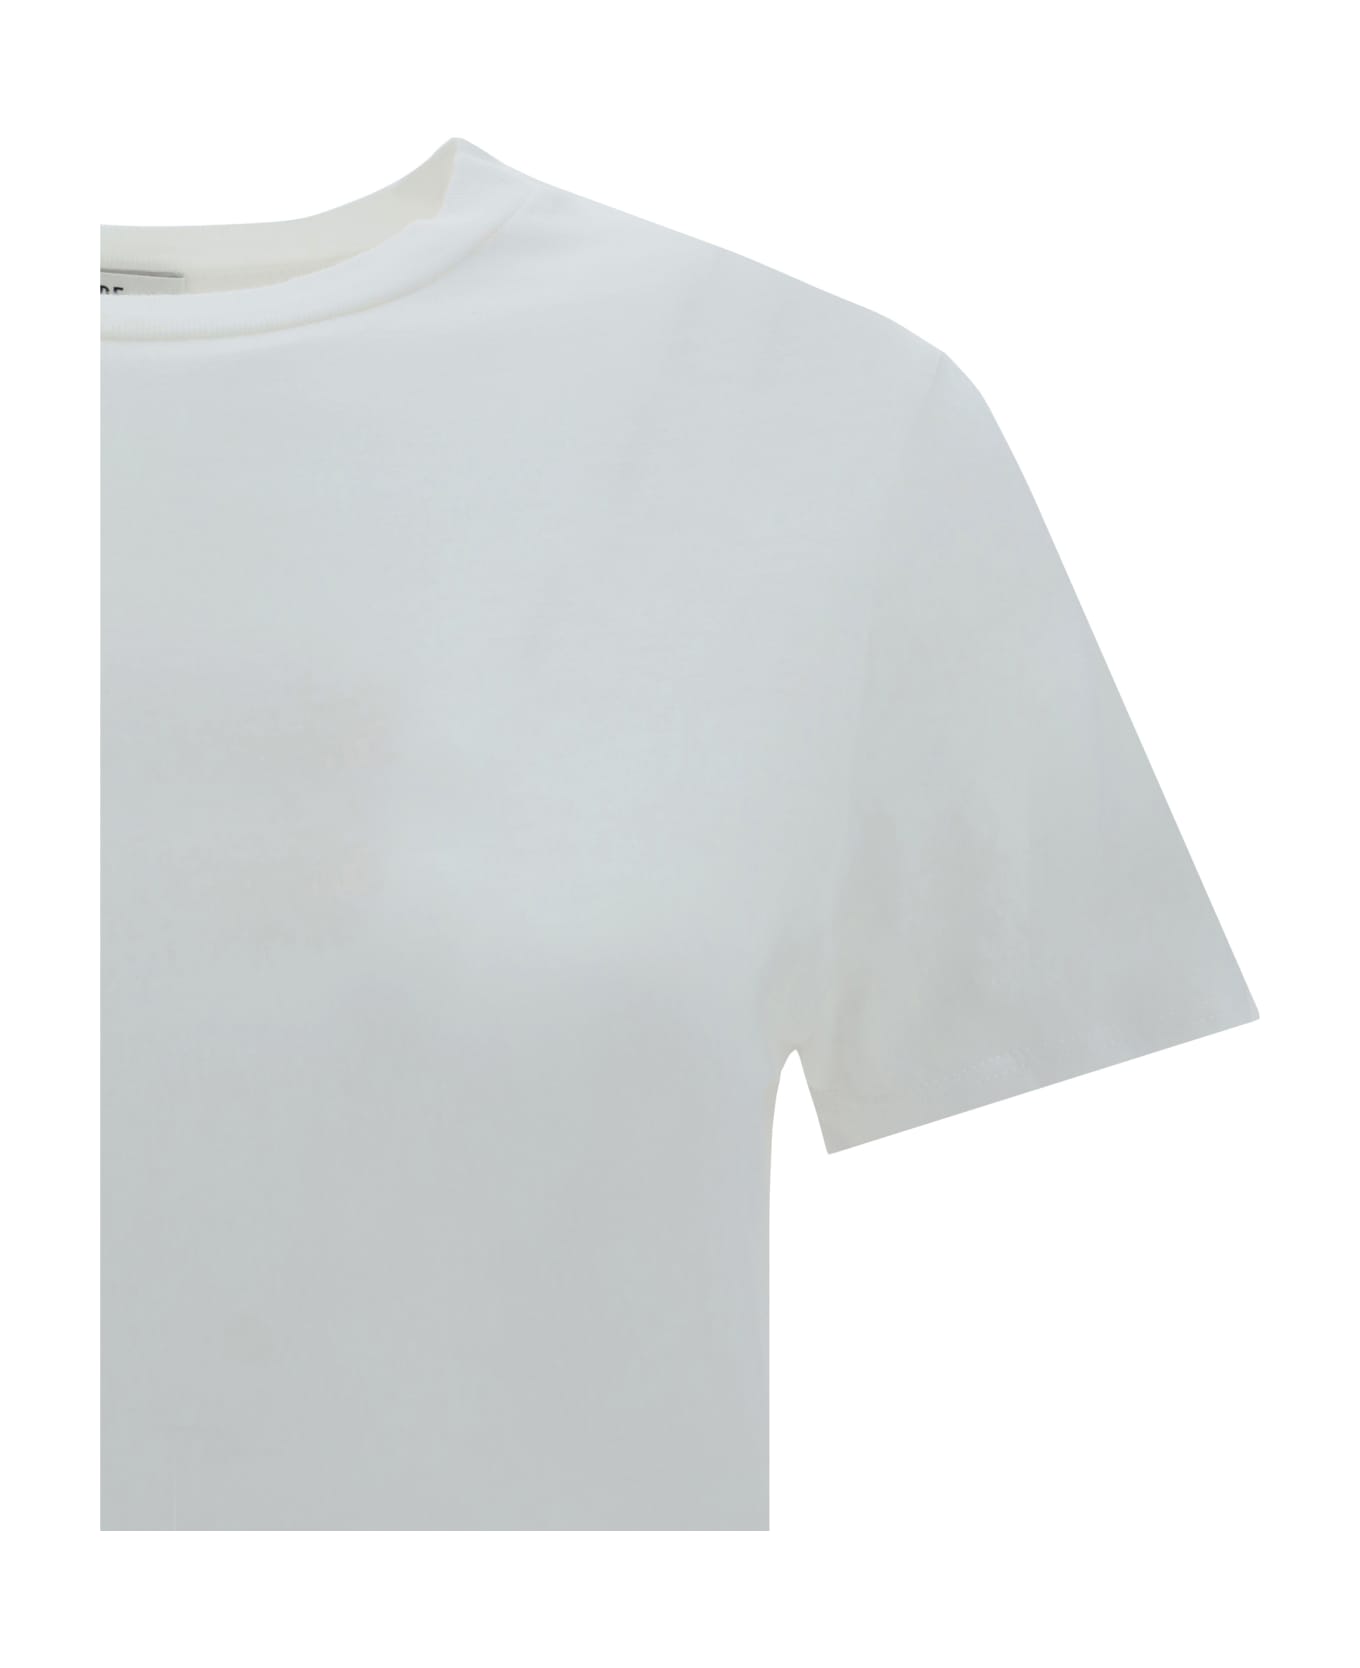 AGOLDE Annise T-shirt - White Tシャツ